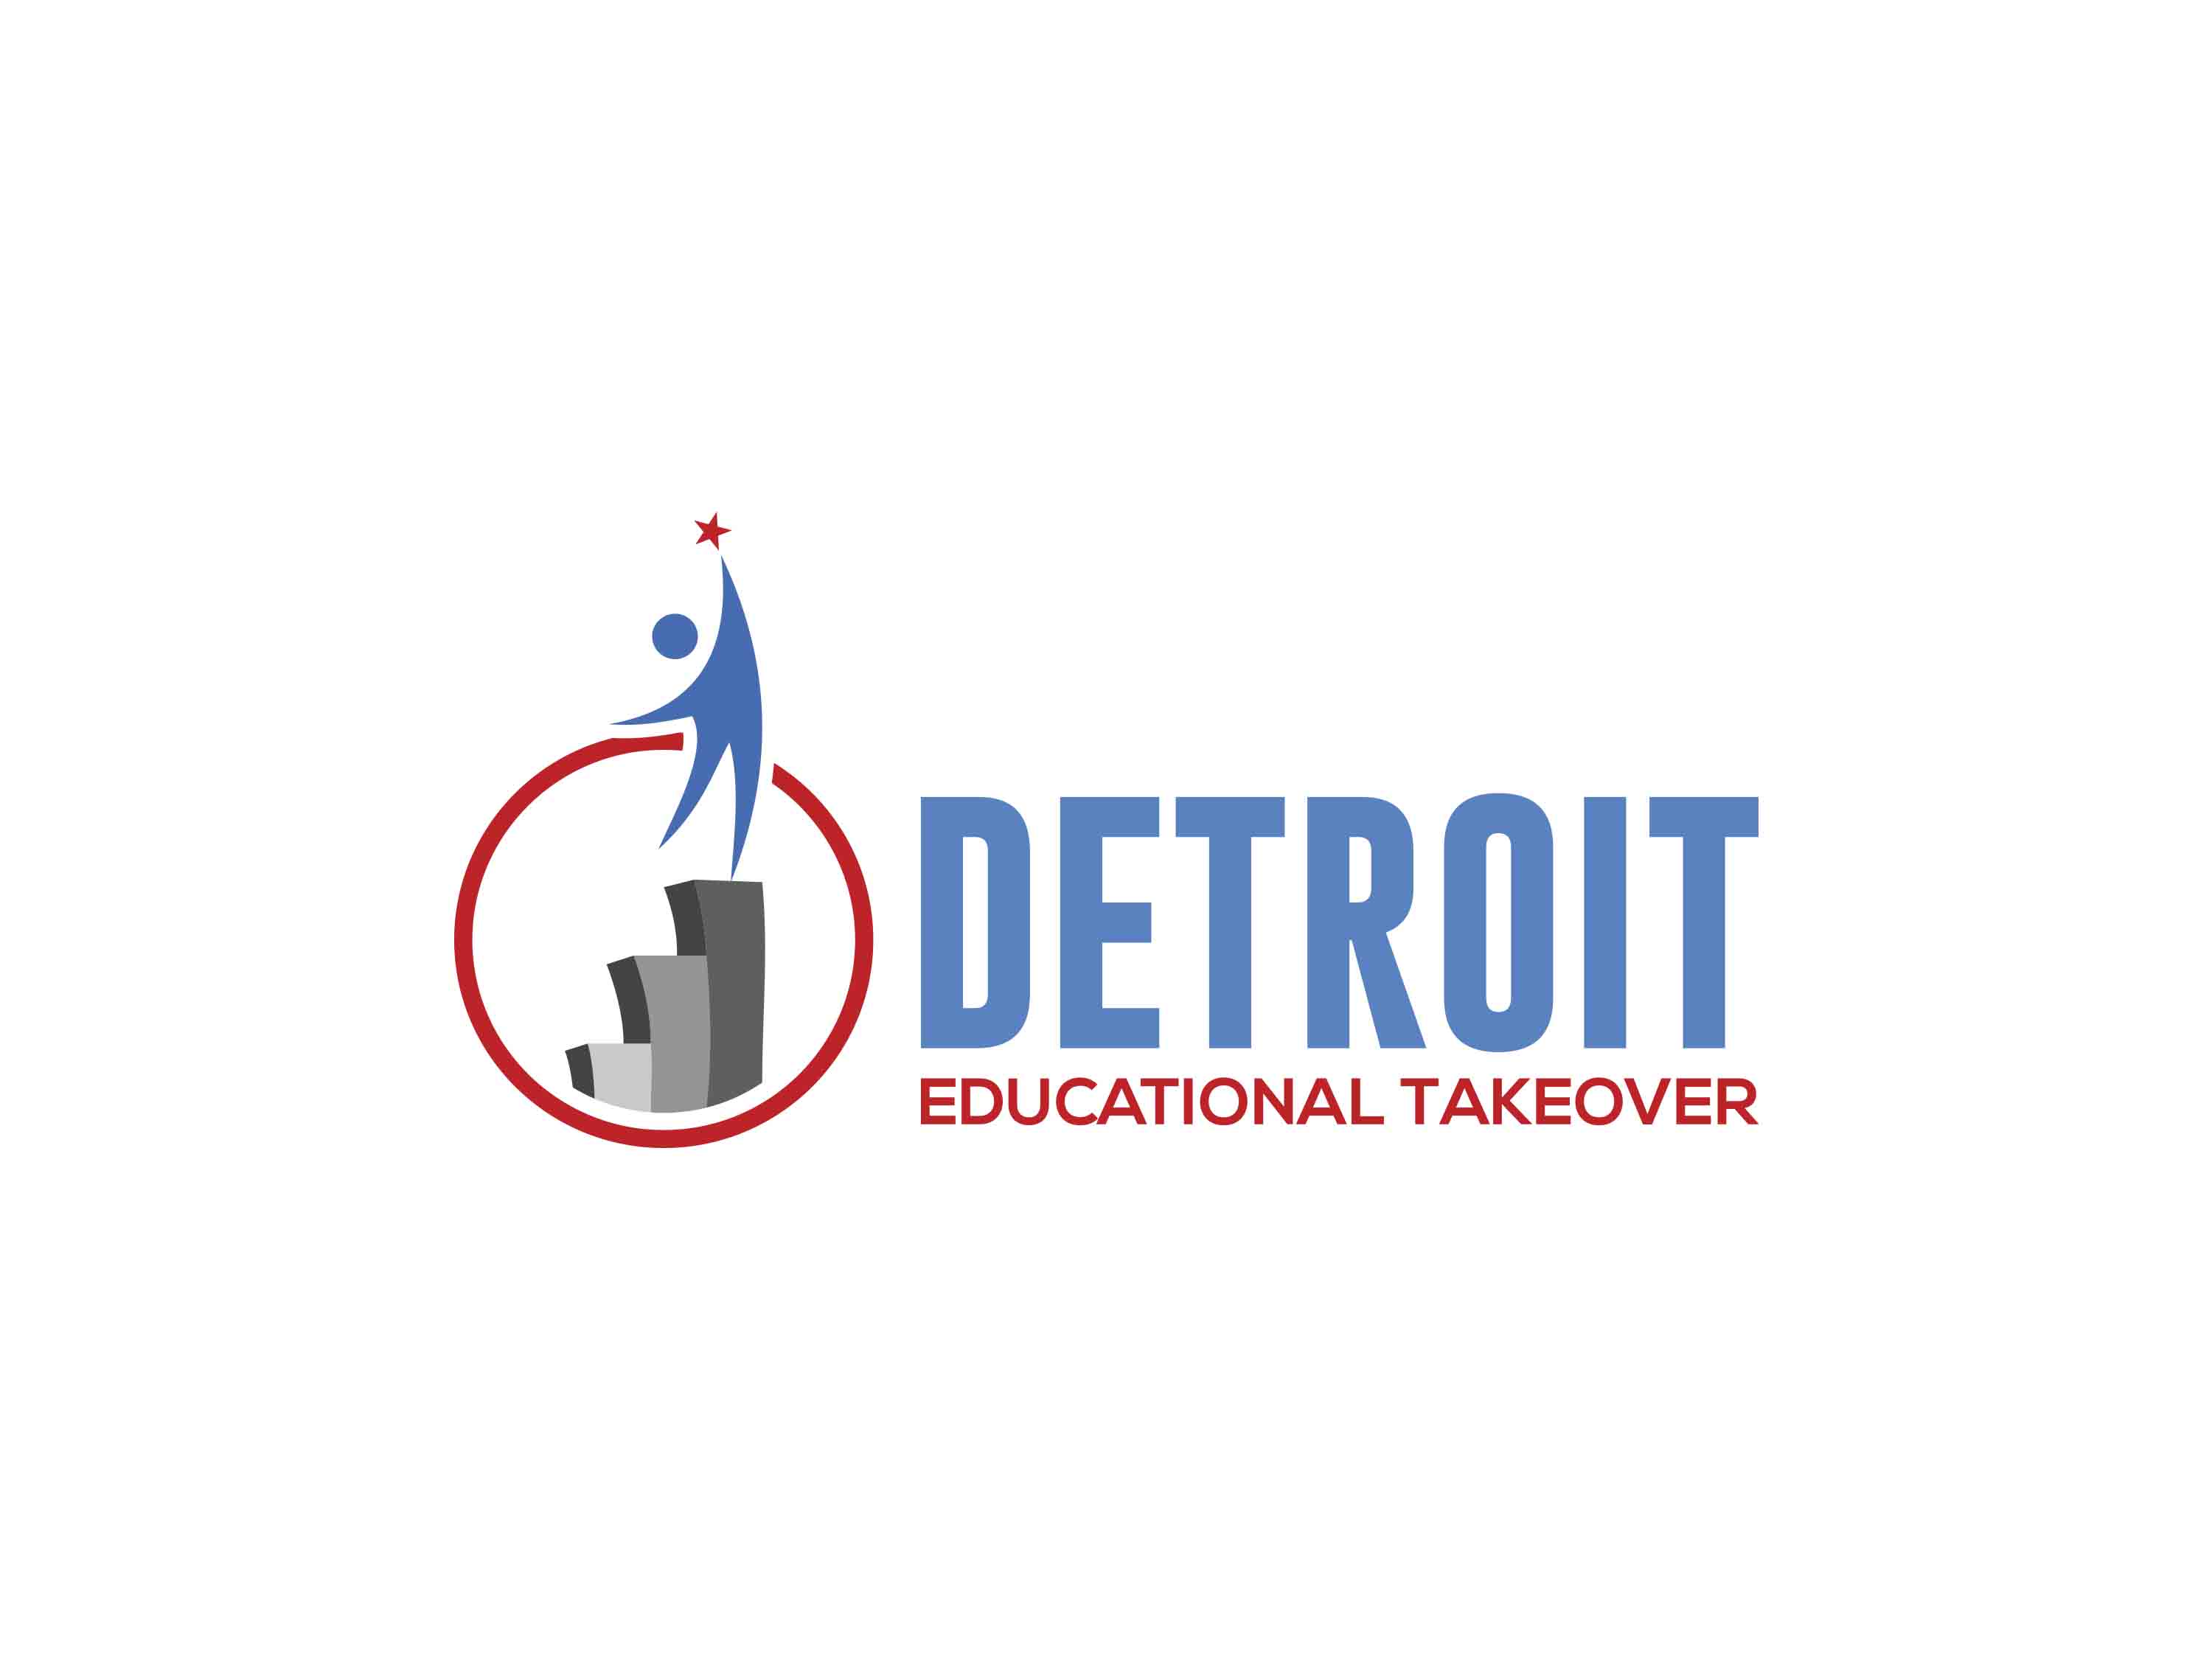 The Detroit Educational Takeover logo